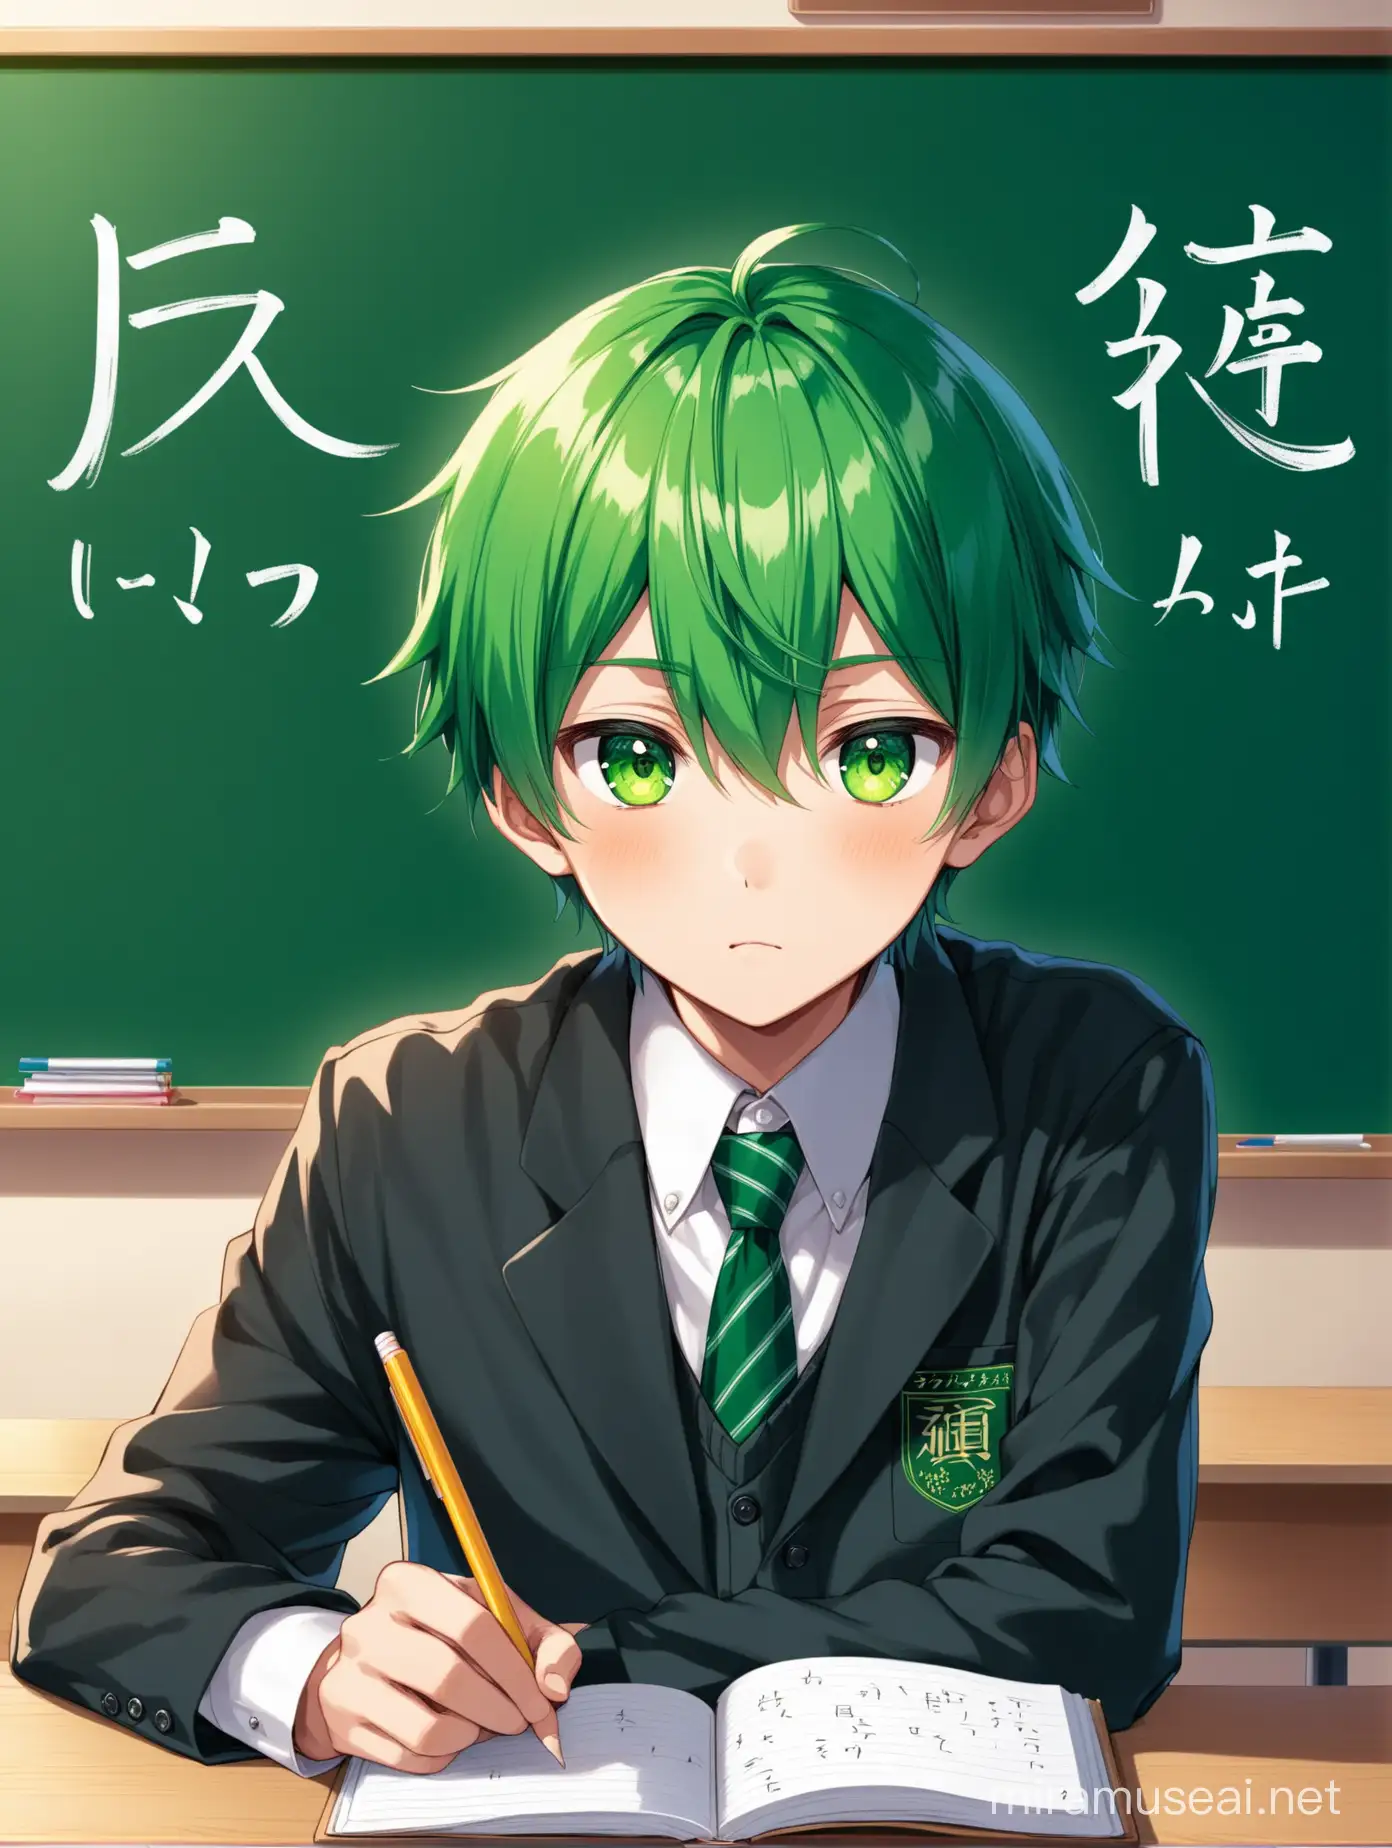 Rebellious Teenage Boy with Green Hair in School Uniform